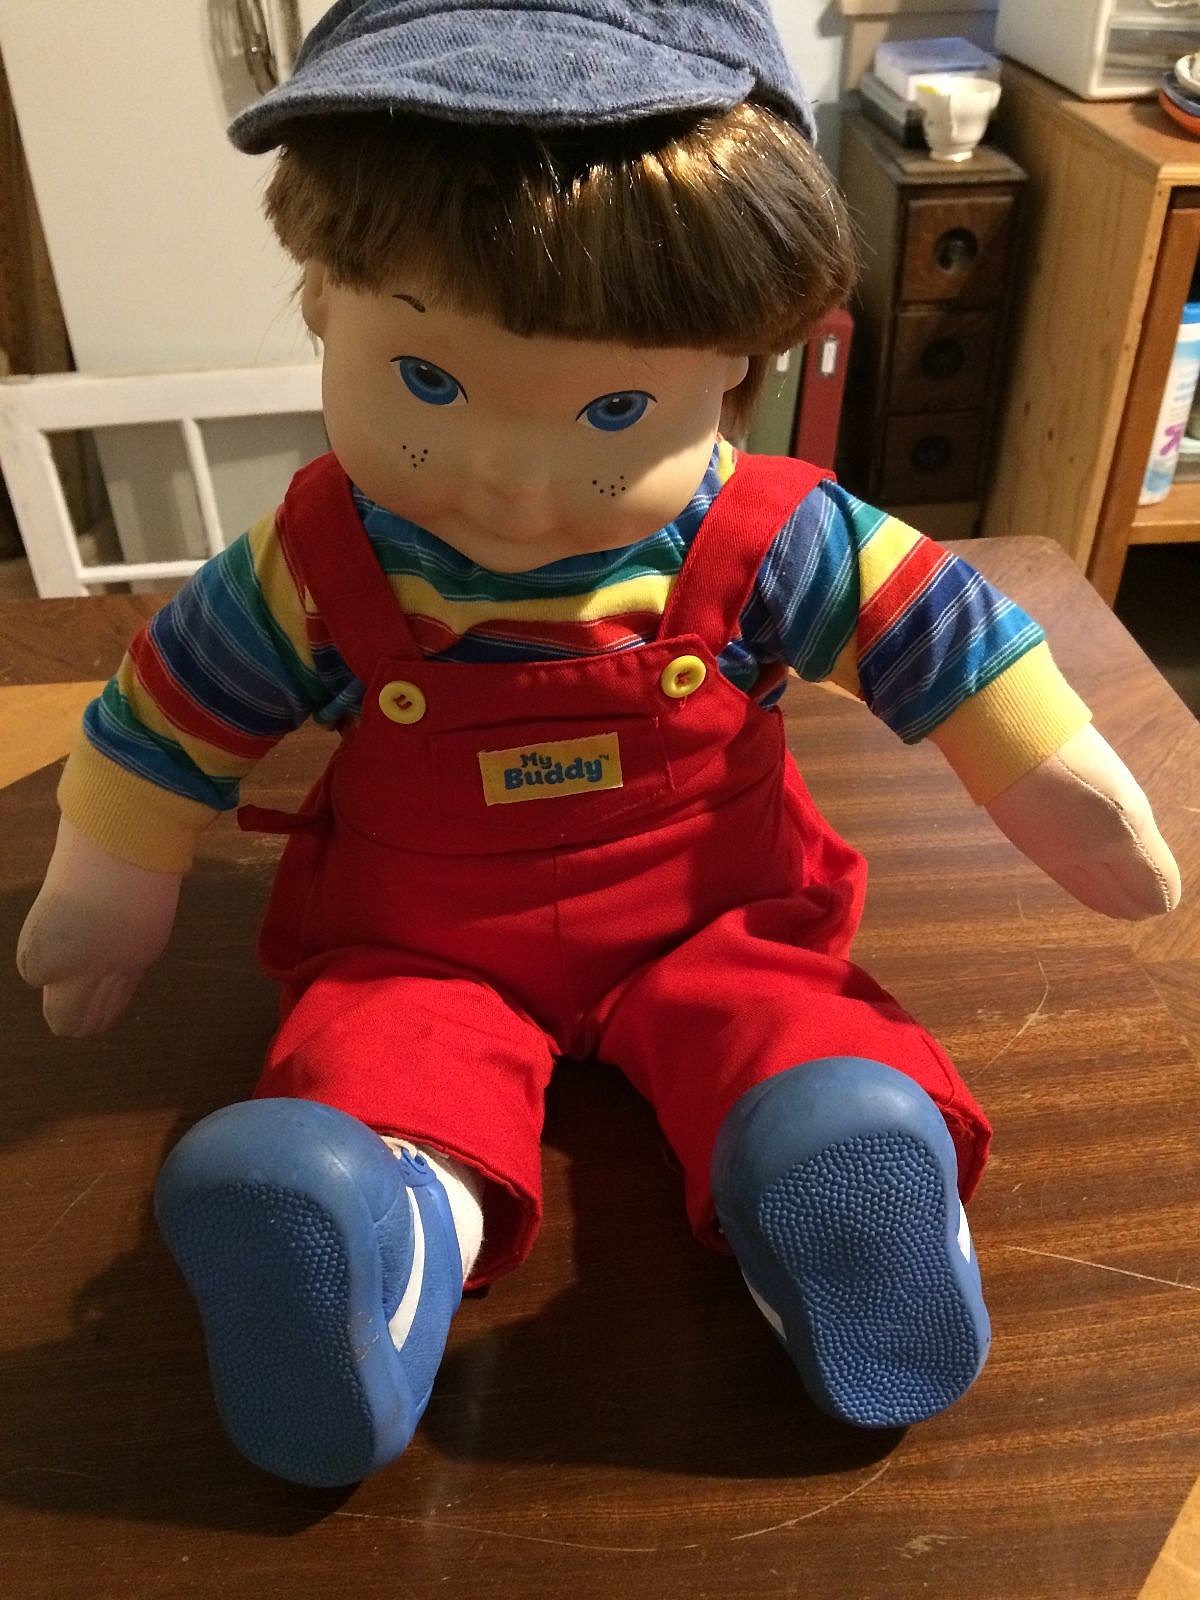 my buddy doll ebay